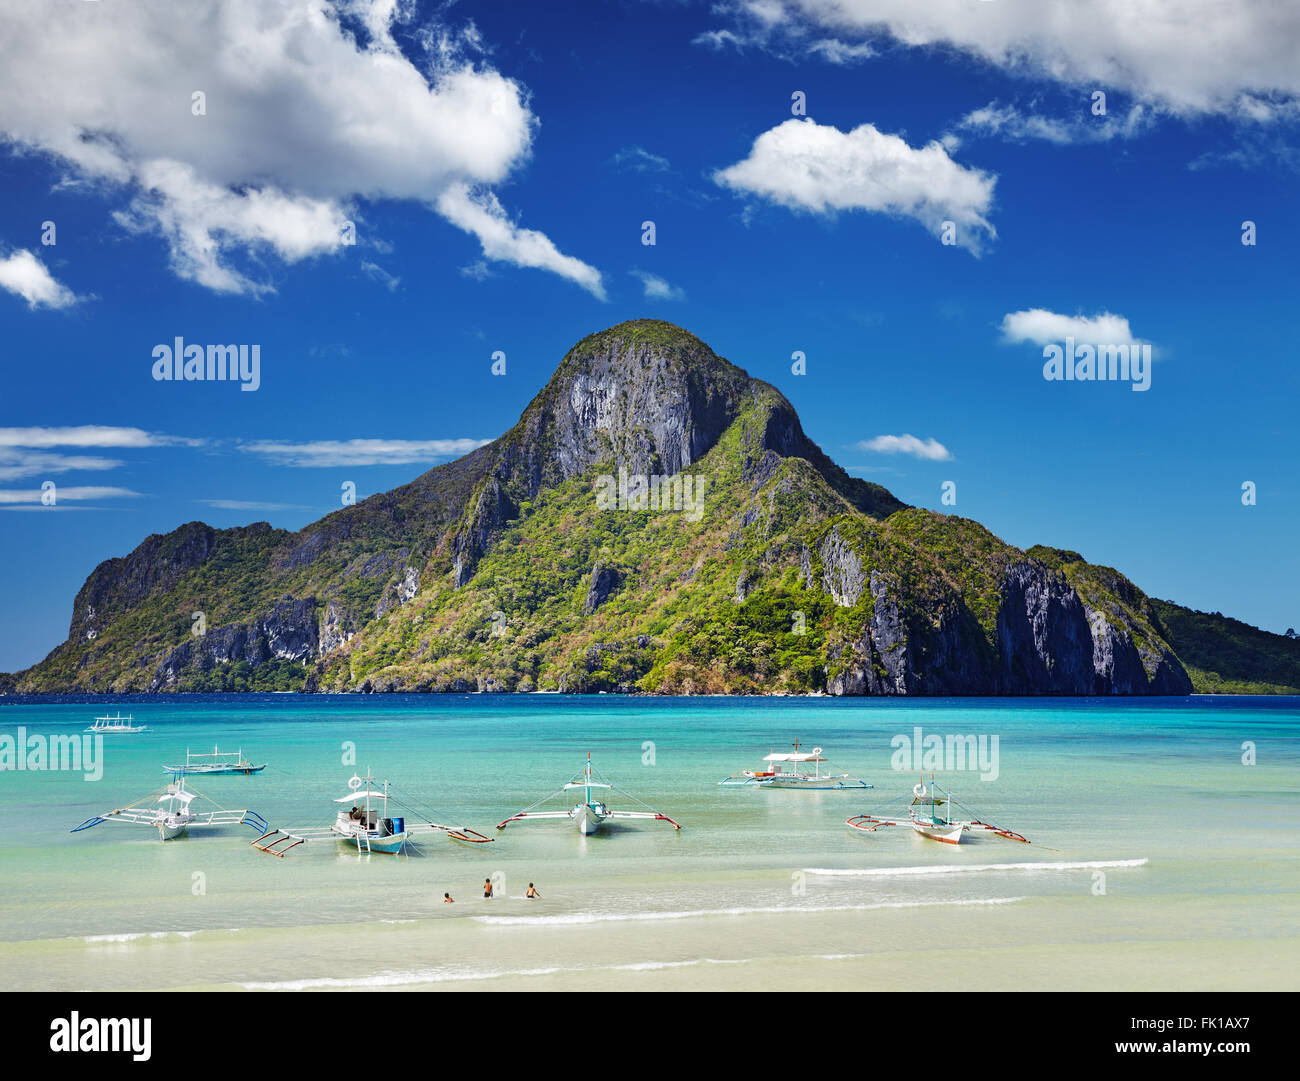 El Nido bay et l'île Cadlao, Palawan, Philippines Banque D'Images